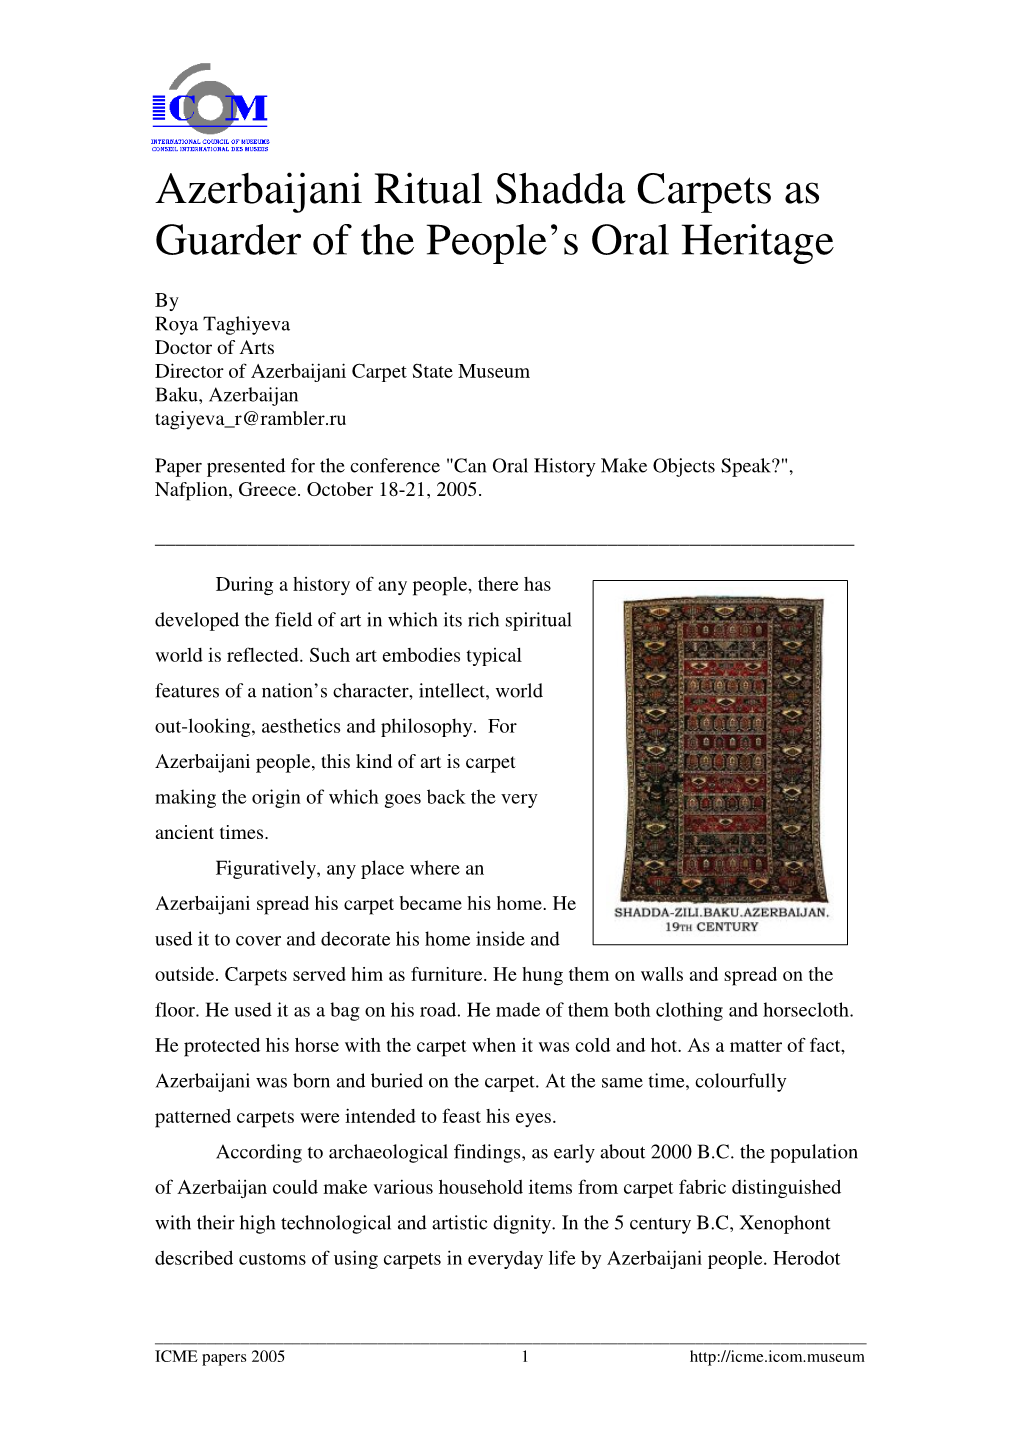 Azerbaijani Ritual Shadda Carpets As Guarder of the People's Oral Heritage